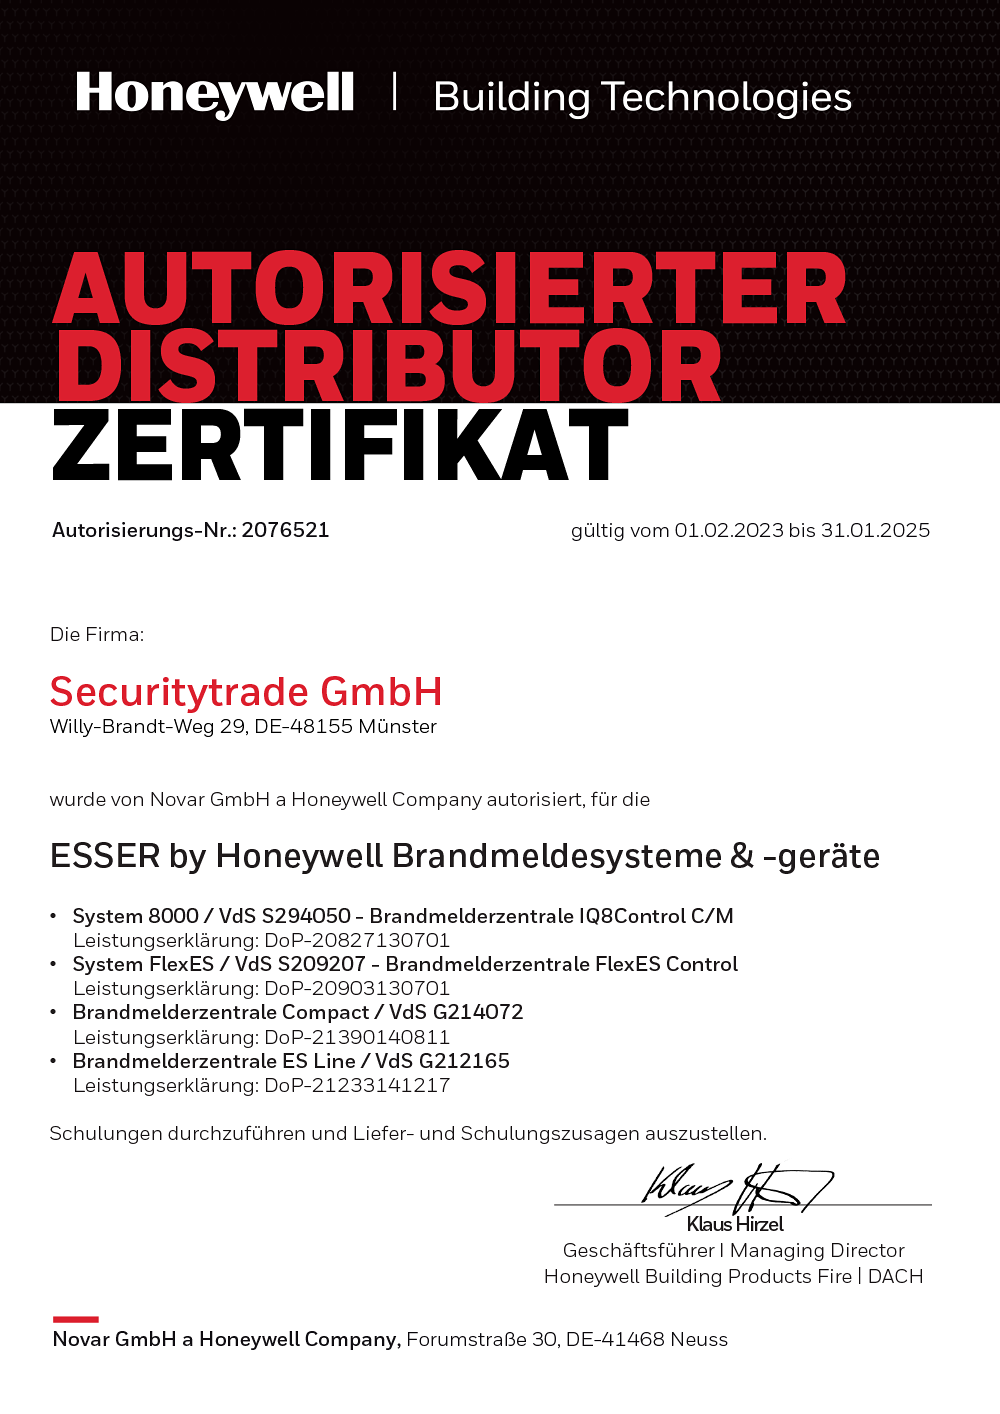 Zertifikat „Autorisierter Distributor“